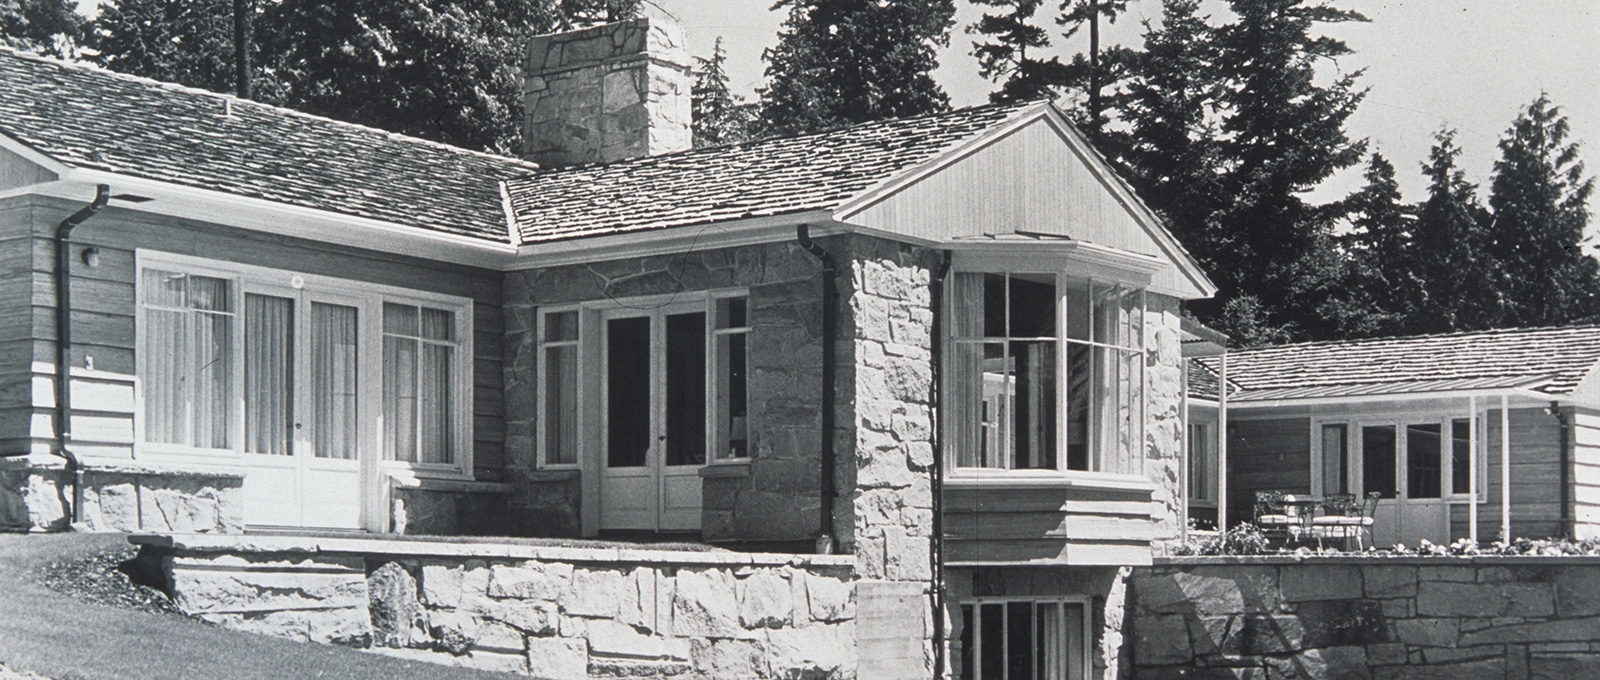 Betty Miller's house circa 1952